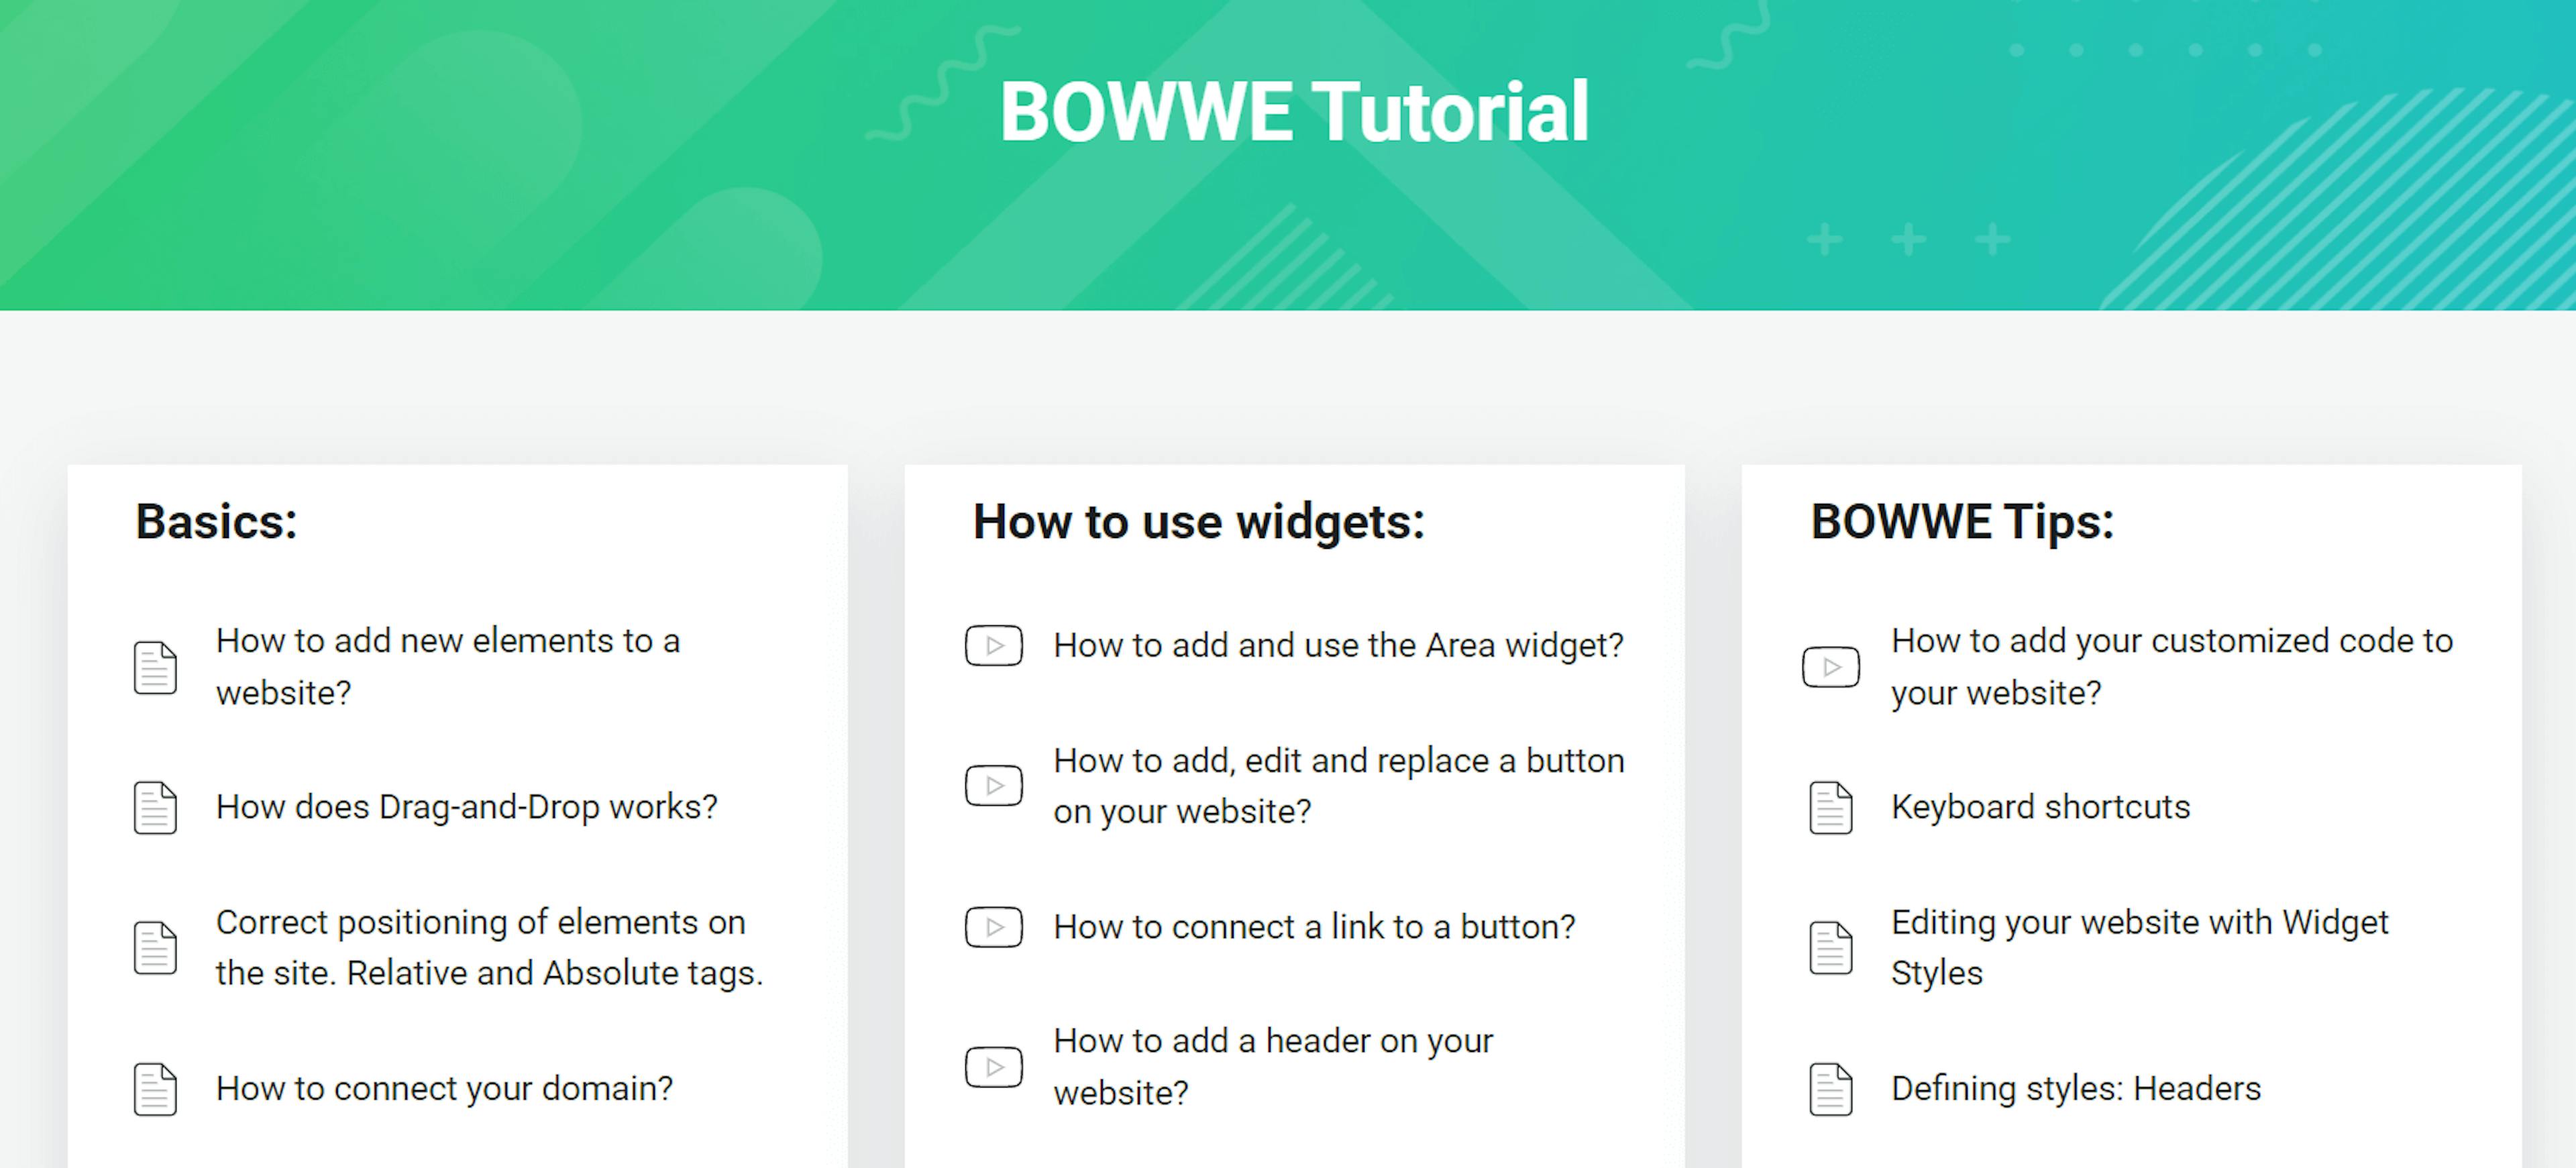 Types tutorials on the BOWWE website